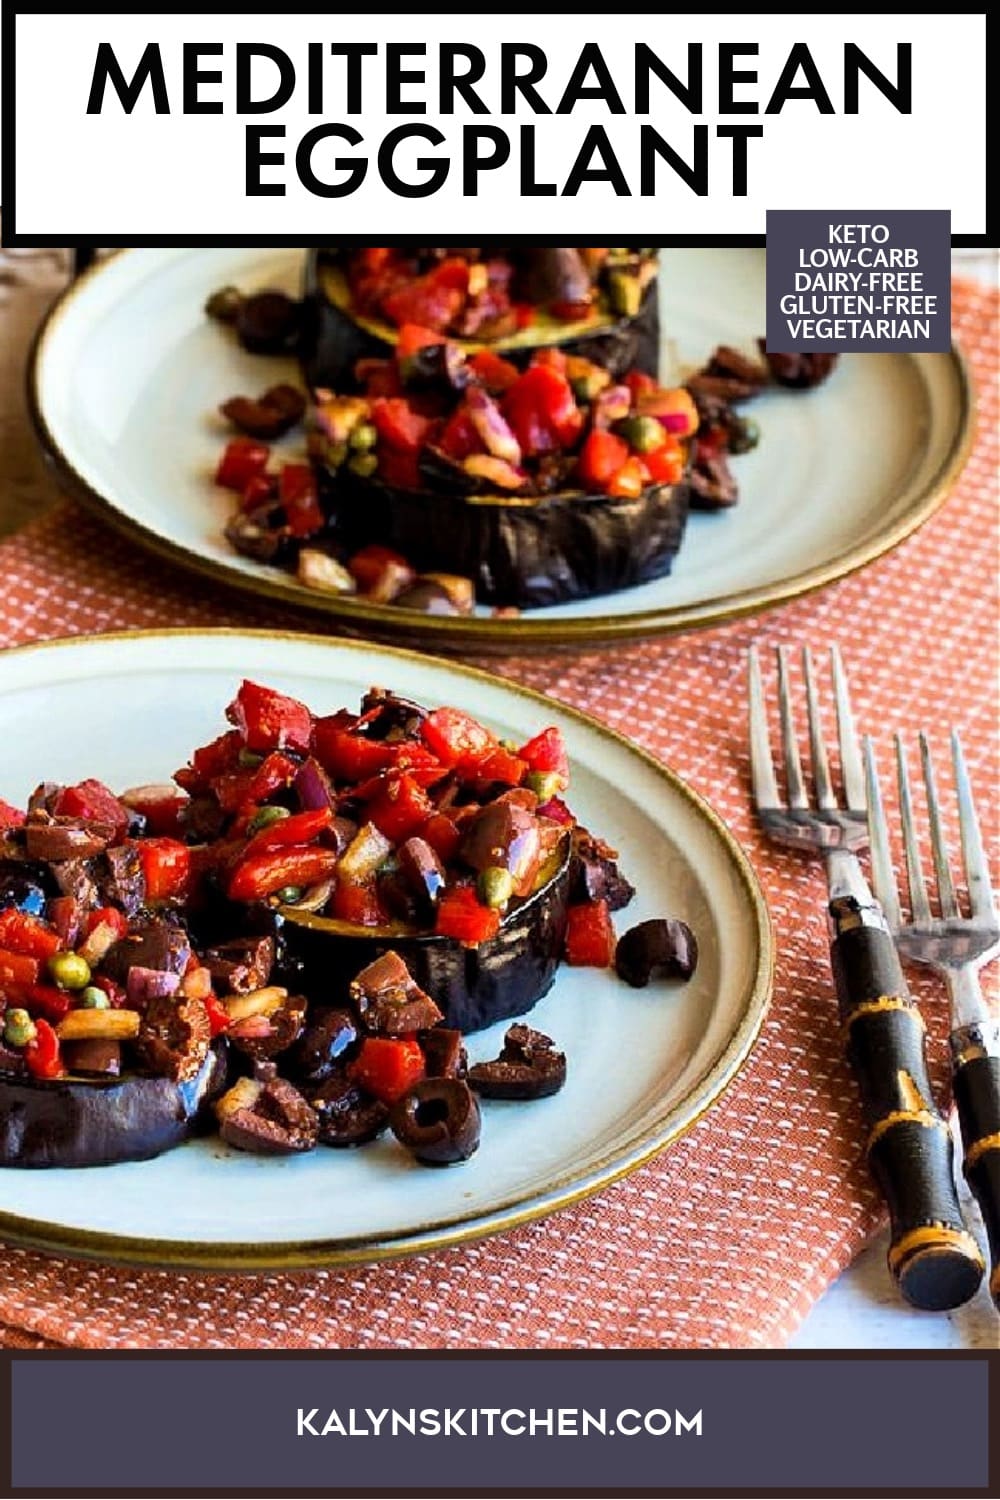 Pinterest image of Mediterranean Eggplant